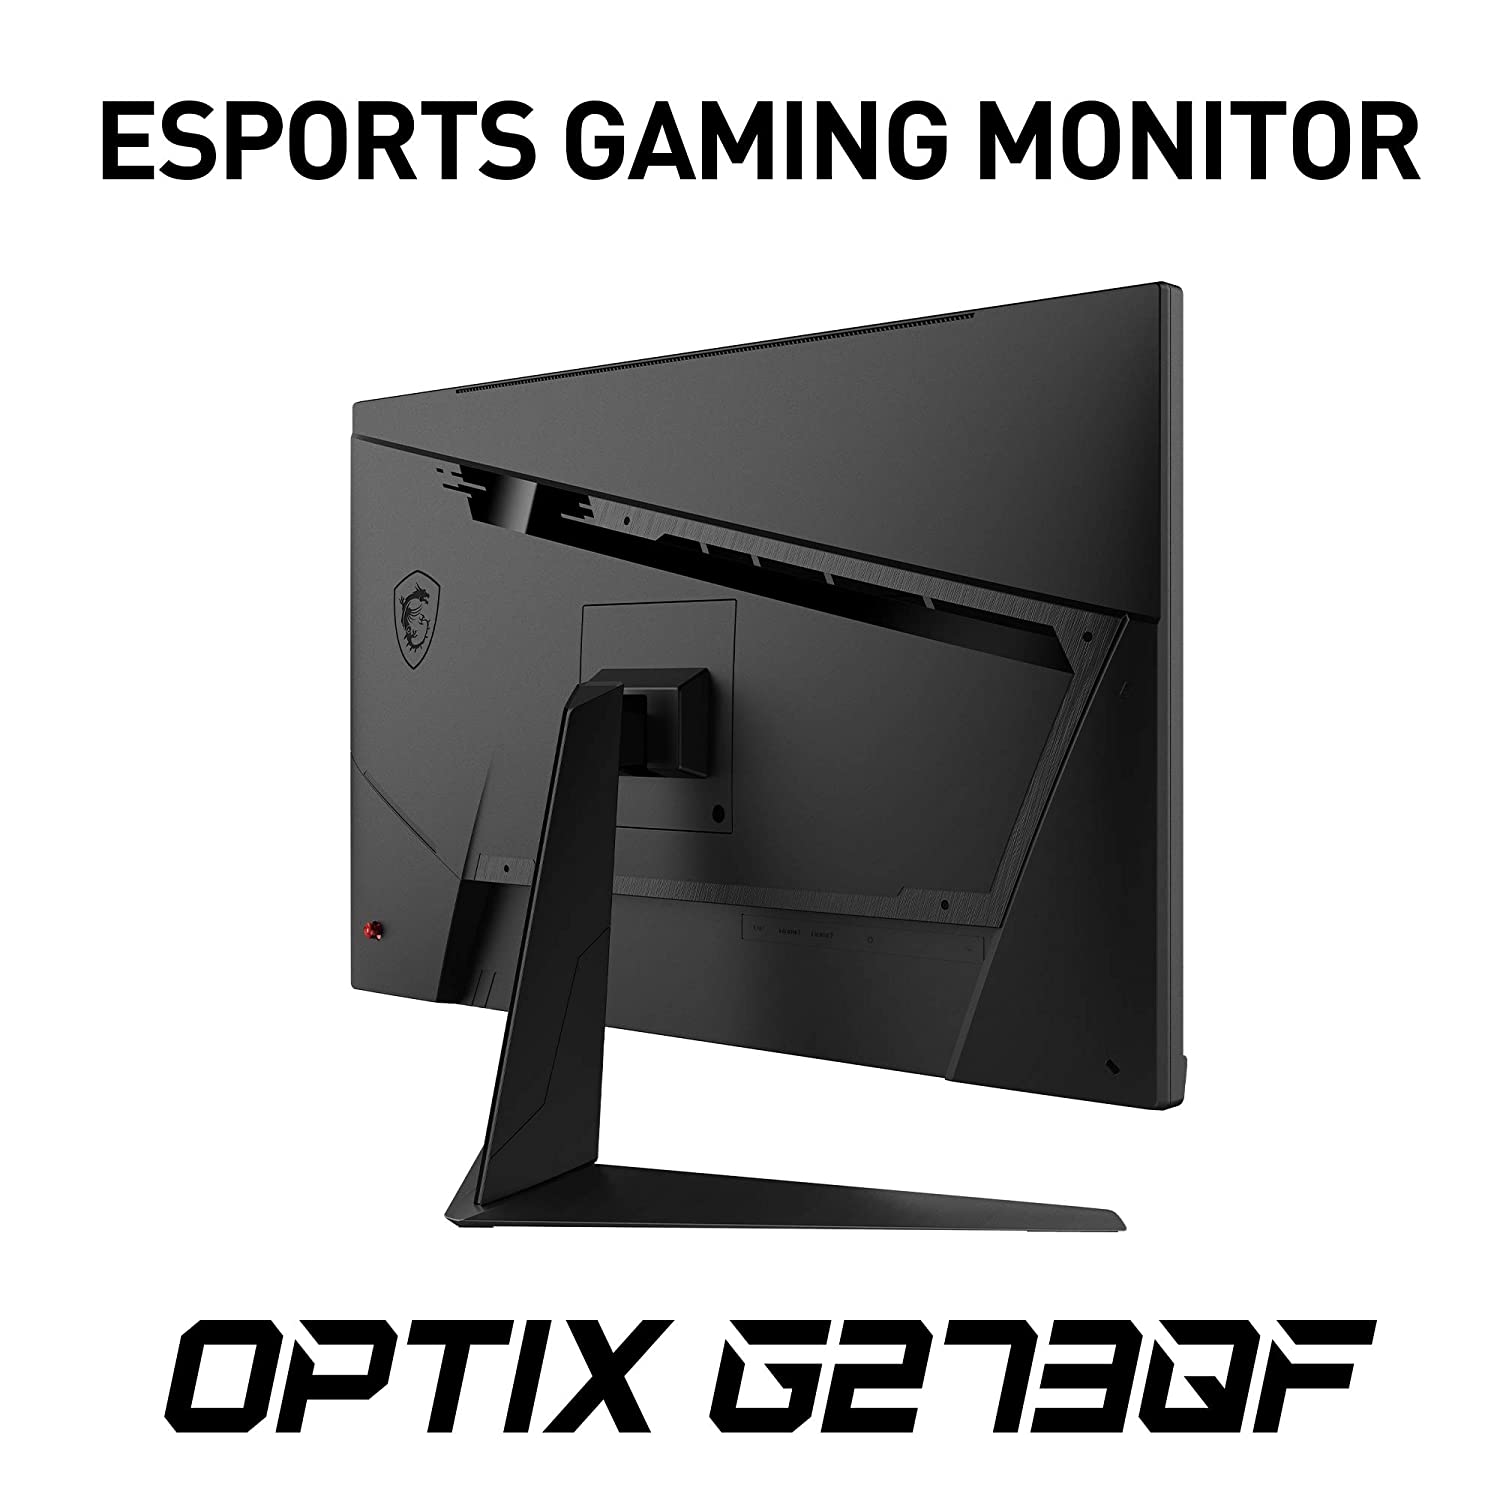 MSI Optix G273QF Esports Gaming IPS Monitor - 27 inch, 16:9 WQHD (2560x1440) Pixels, Rapid IPS, 165Hz, 1ms GTG Response Time, Less Blue Light